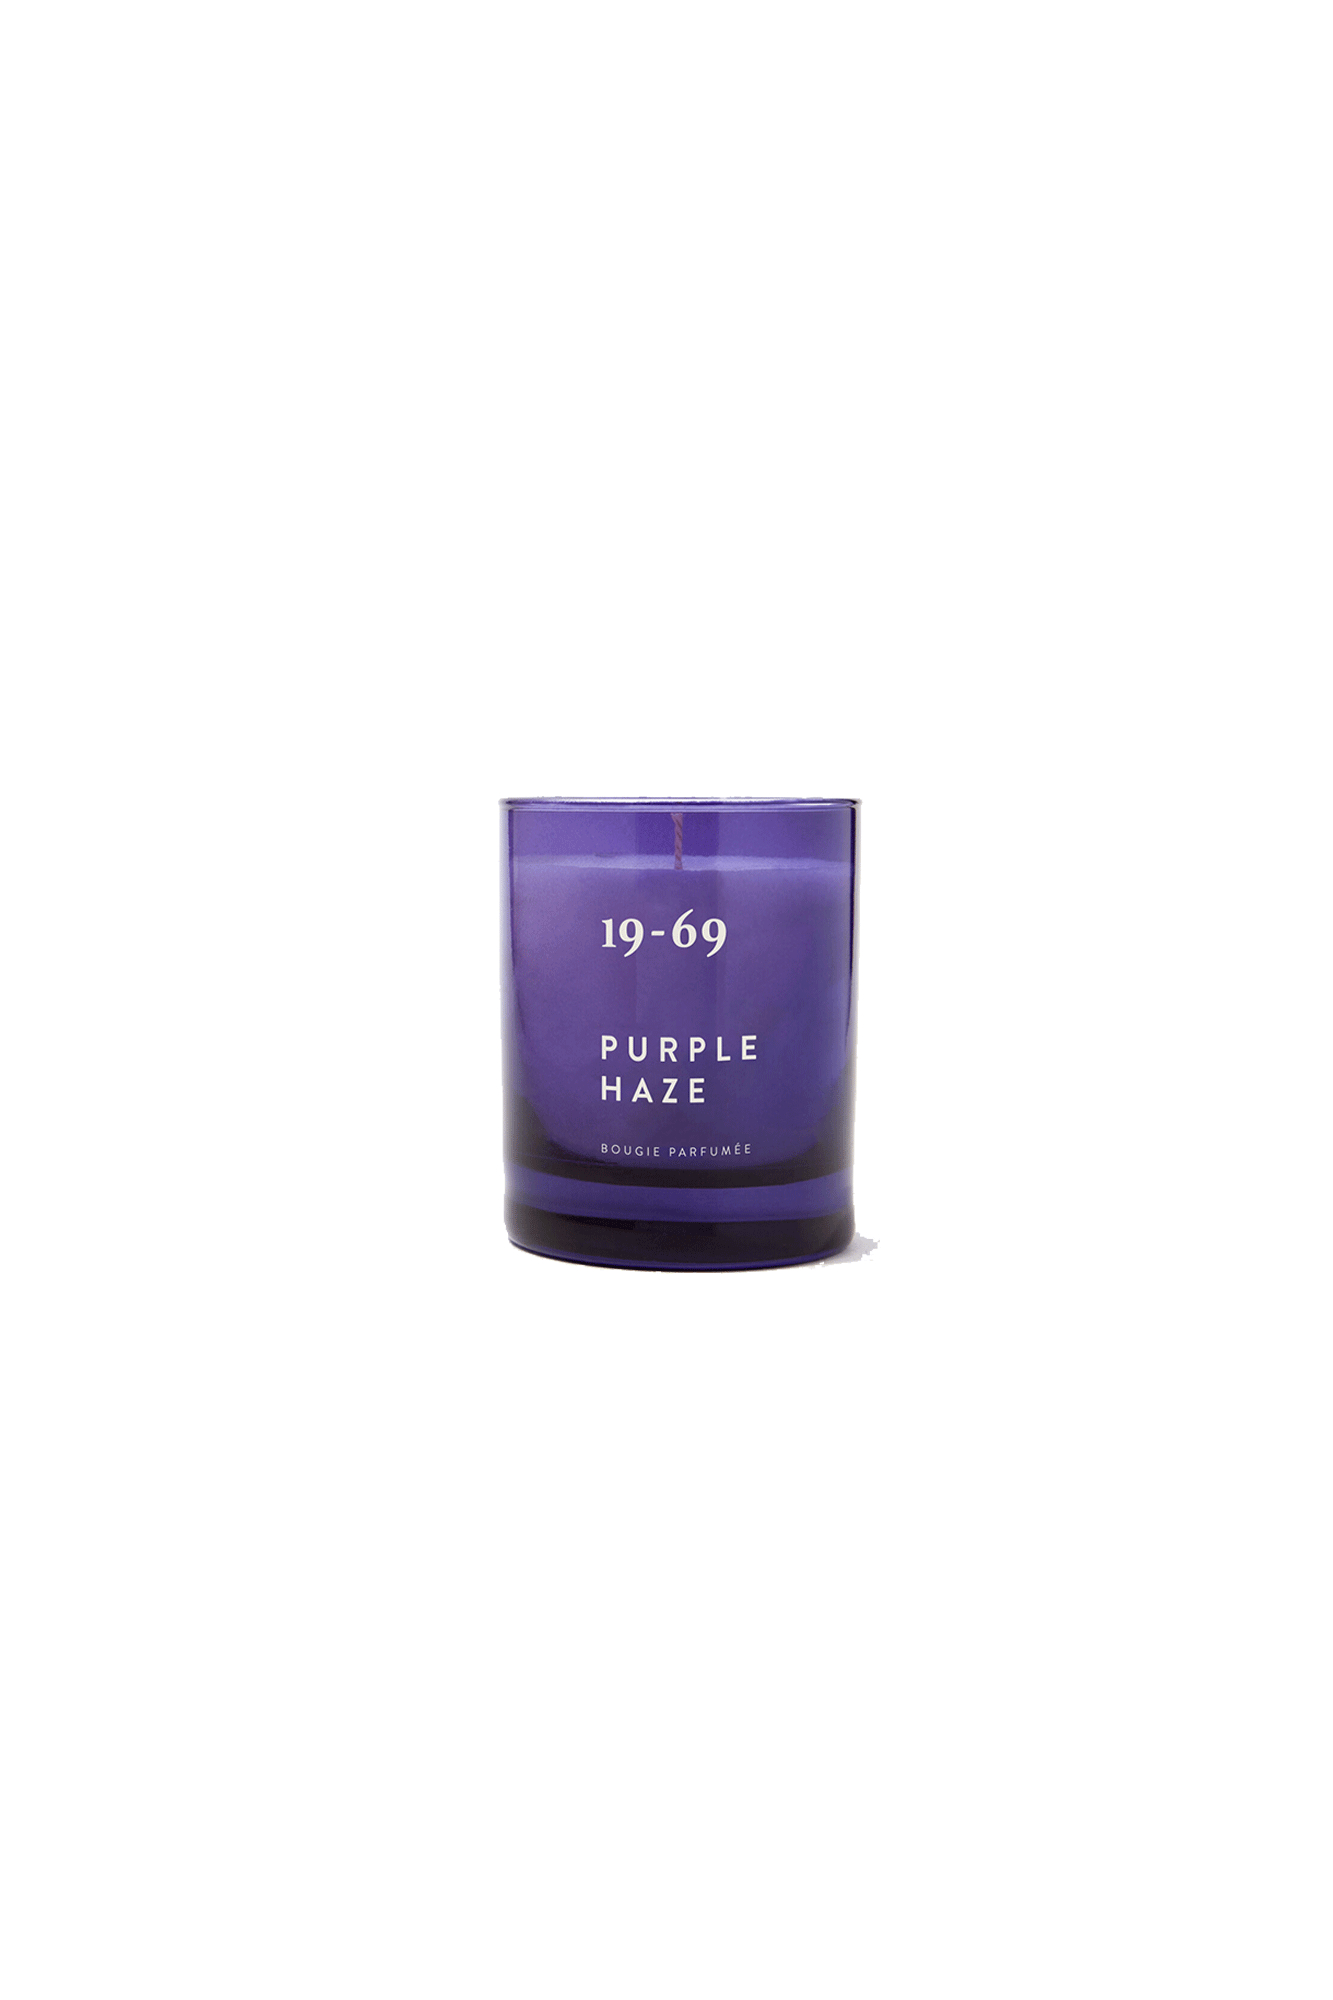 Purple Haze Bougie Parfum?e 200ml